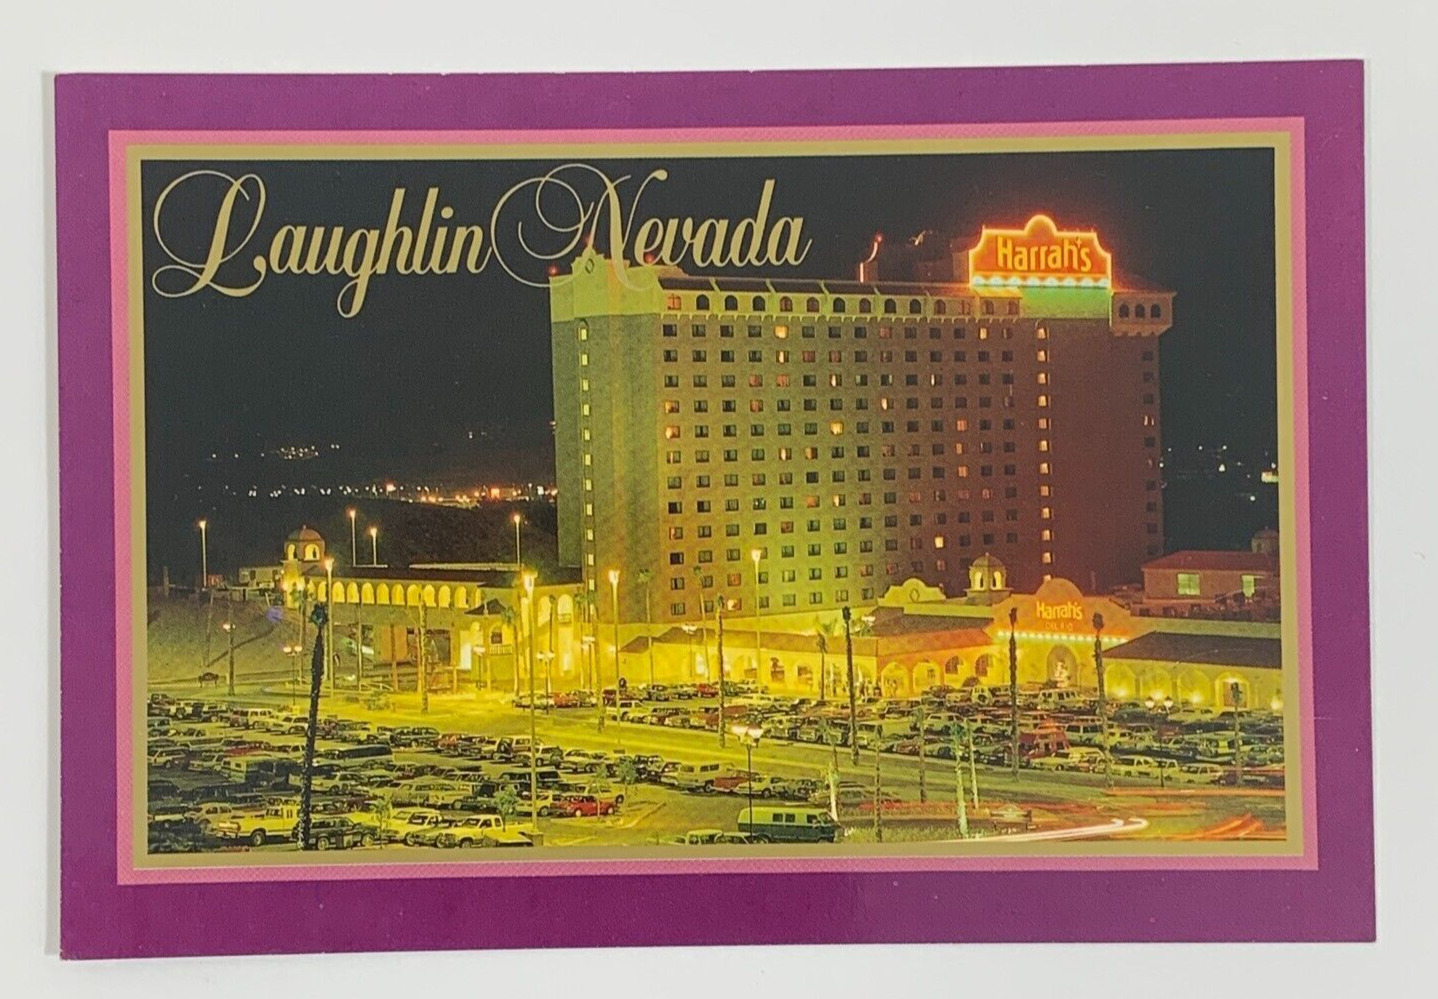 Harrah's Del Rio Laughlin Nevada Postcard 1988 Unposted The Collectors Series